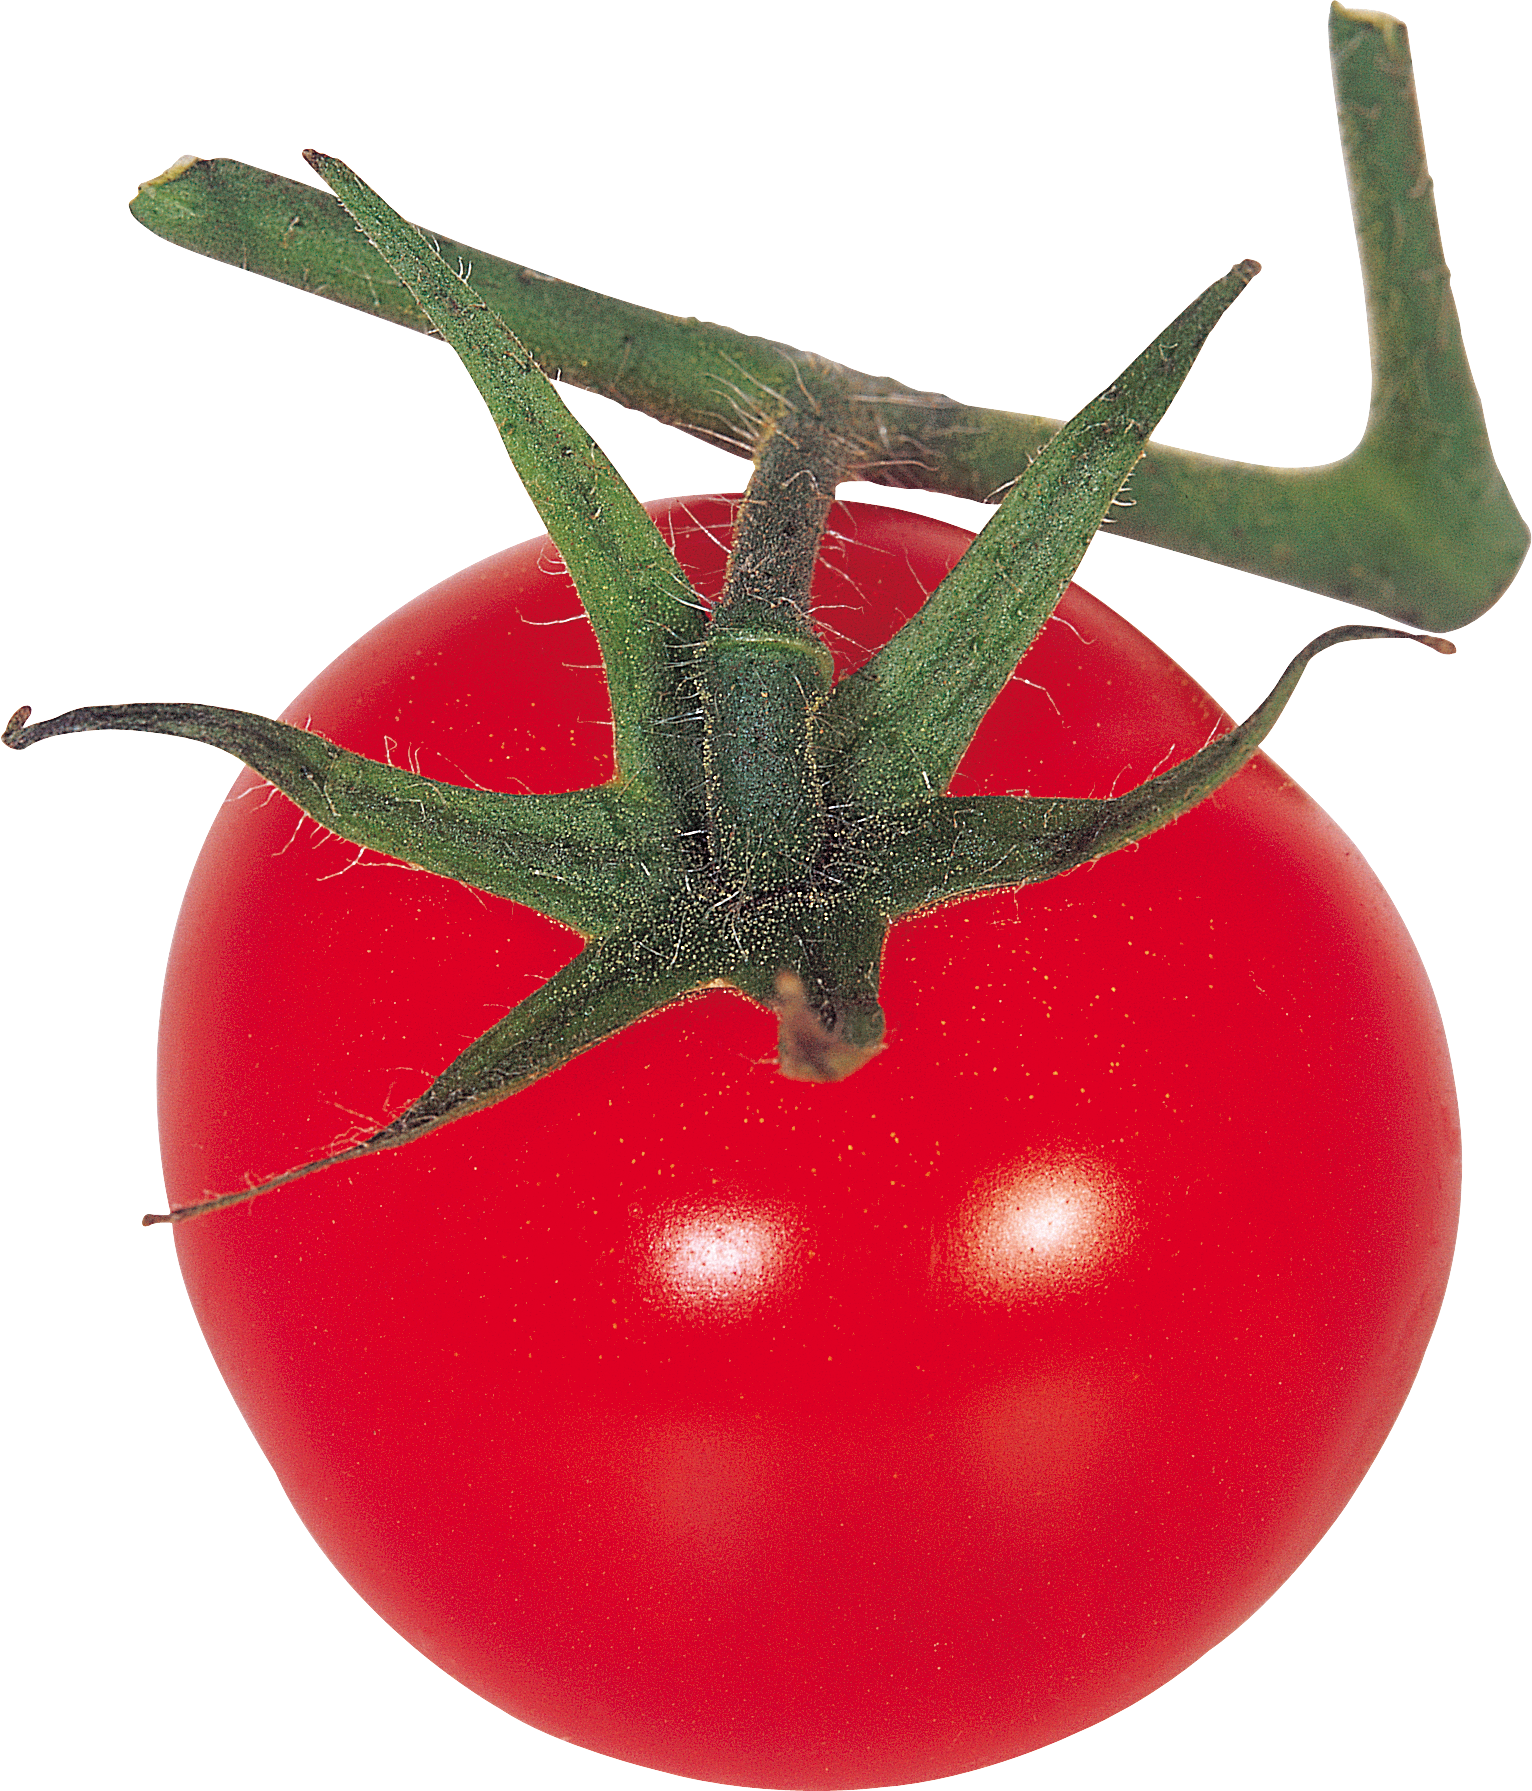 Tomatoes lettuce tomato